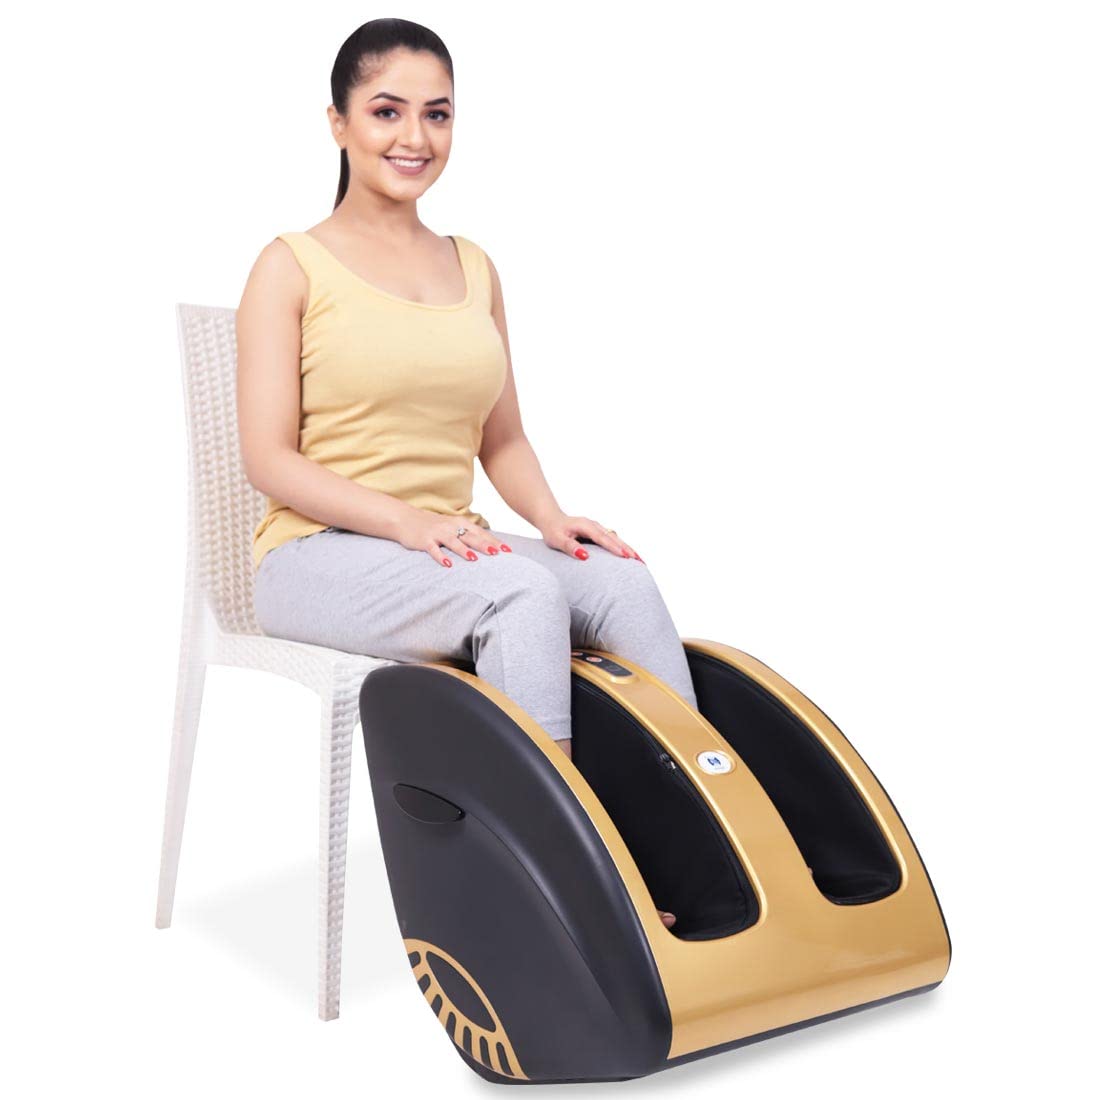 Foot Massager Machine Price in India